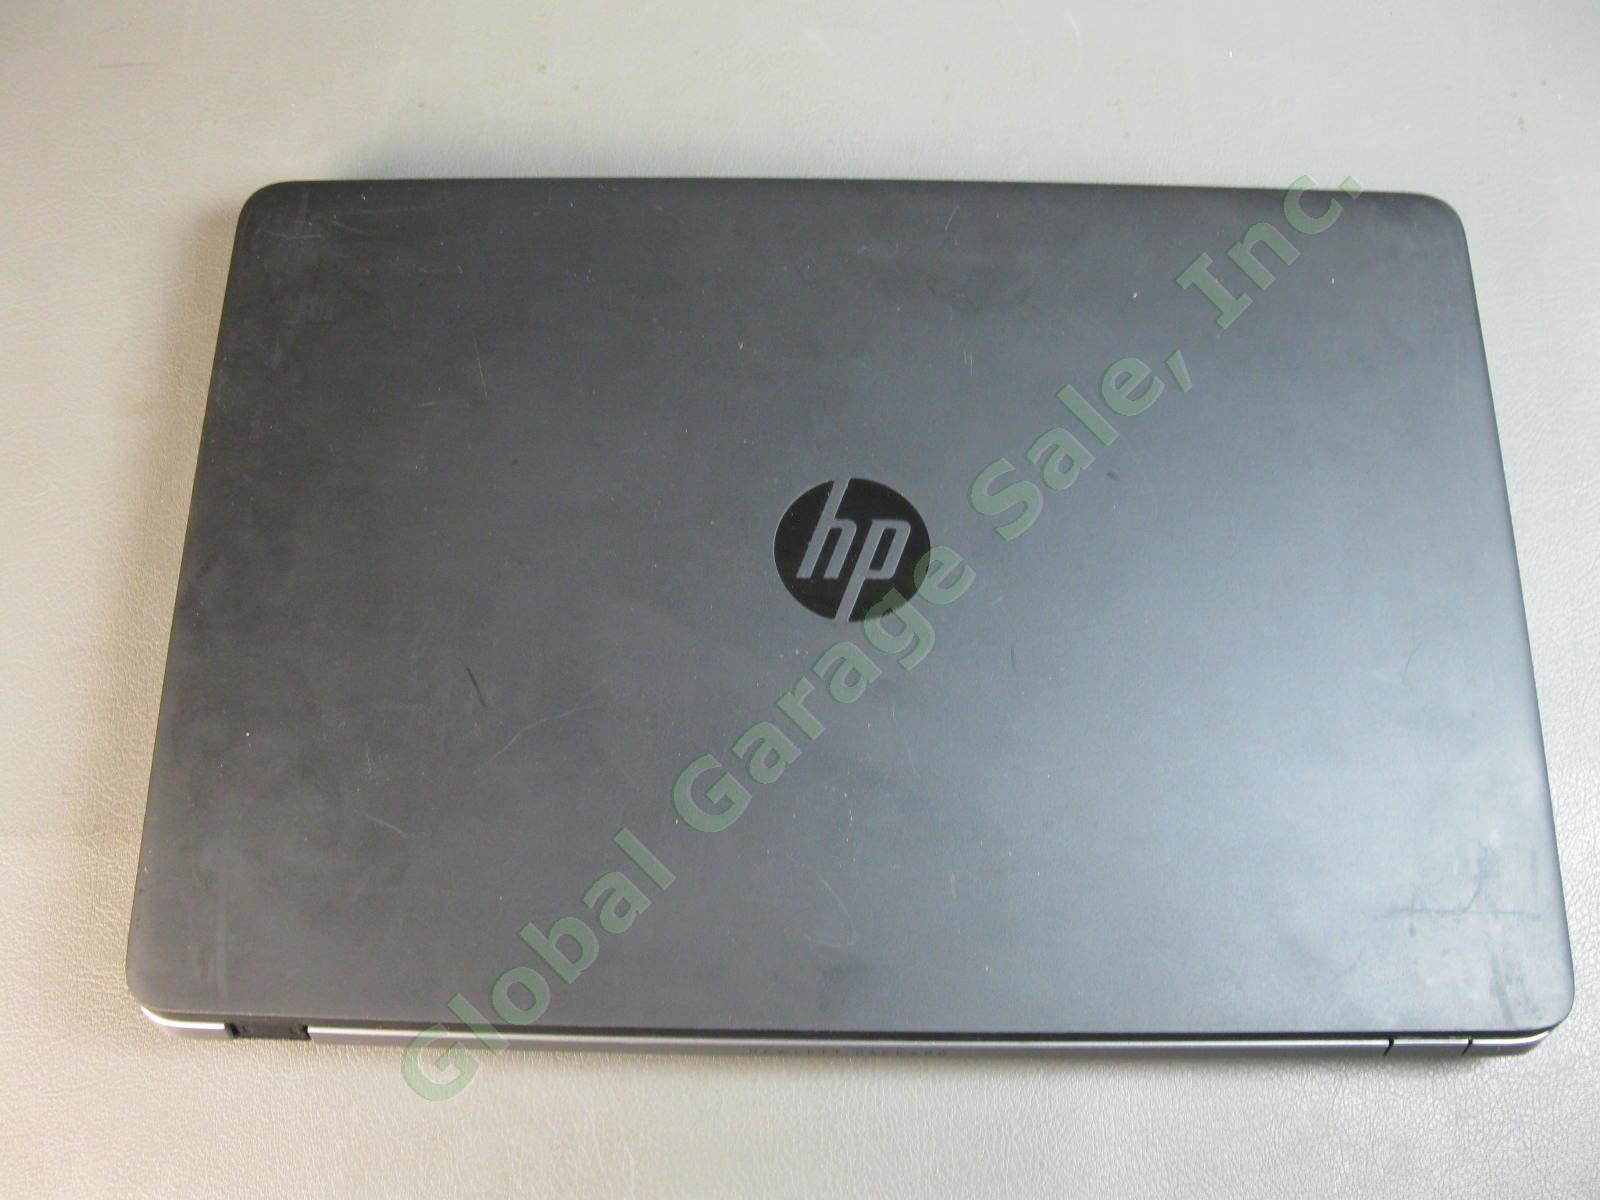 HP ProBook 450 G1 Laptop Computer i5-4200M 4GB 320GB Win10 WIFI DVD Webcam Power 7